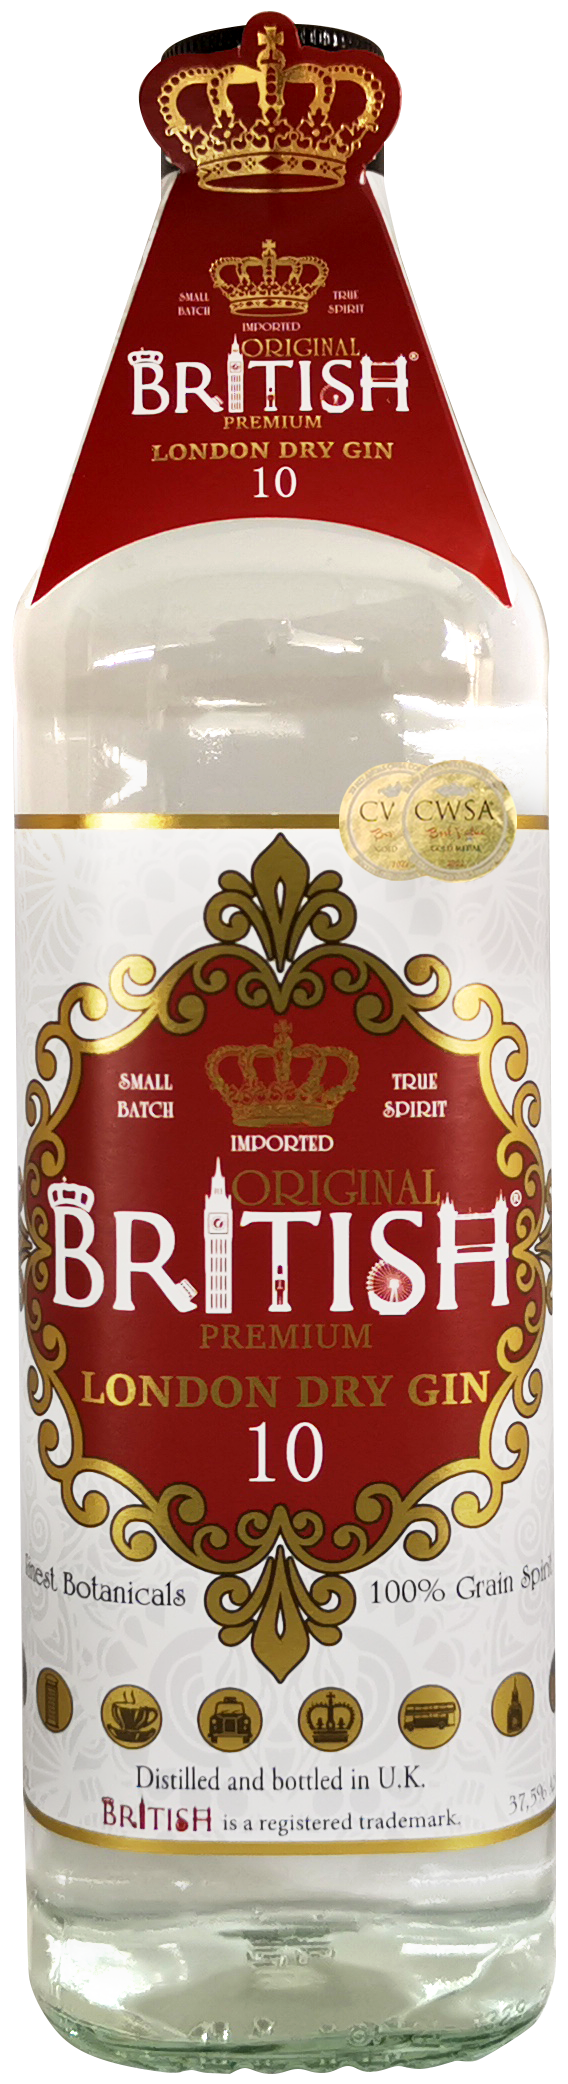 British London Dry Gin medallas